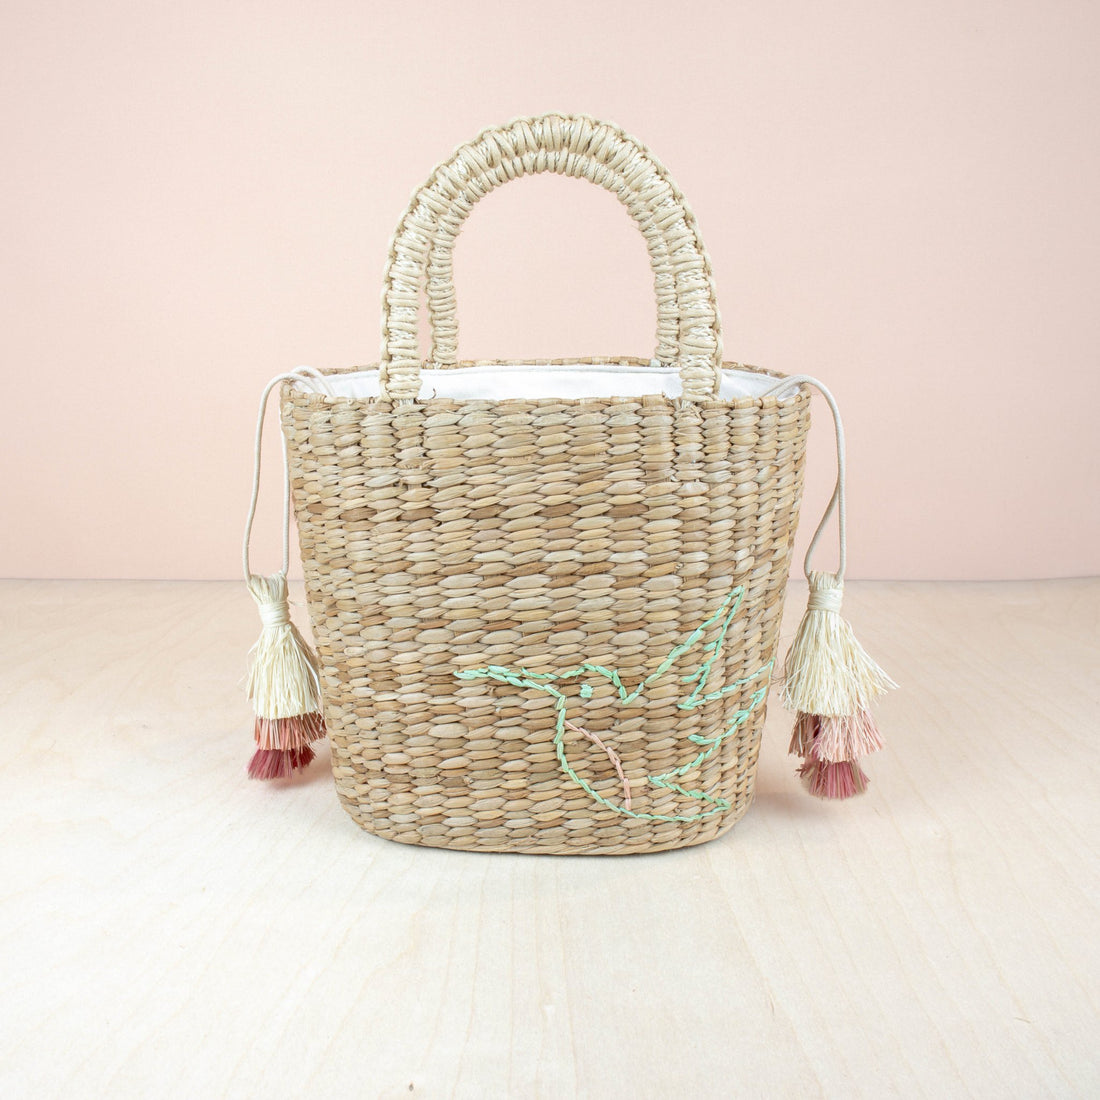 Handbags - Mini Modern Straw Tote with Embroidered Hummingbird - Woven Tote Bag | LIKHA - LIKHÂ